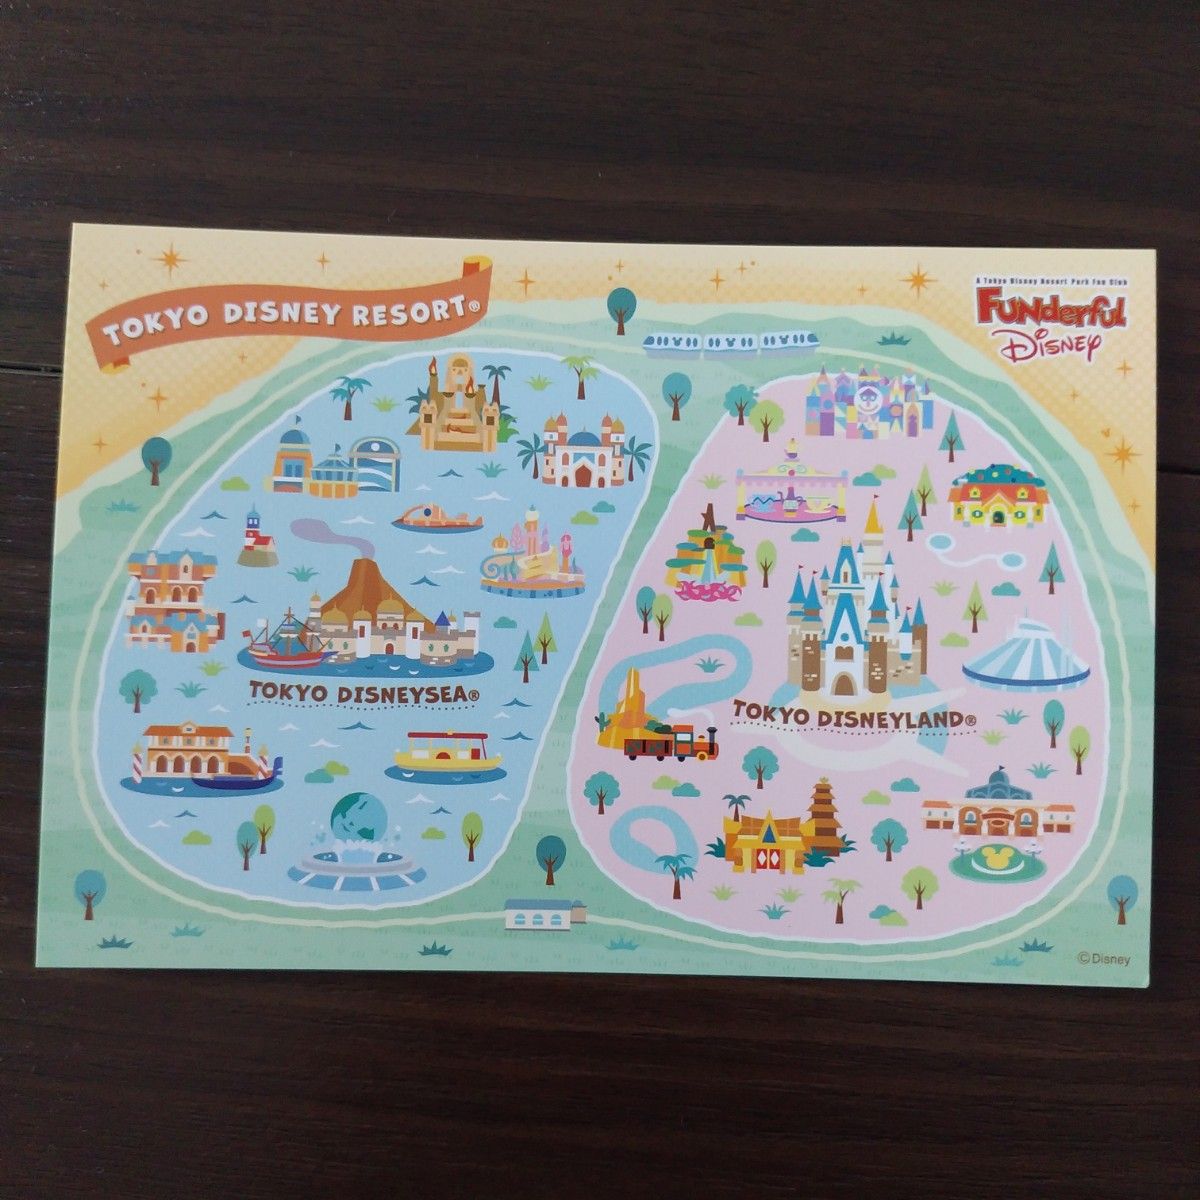 Disney　ファンダブルディズニー　ティシュボックスカバー　ポストカード3枚